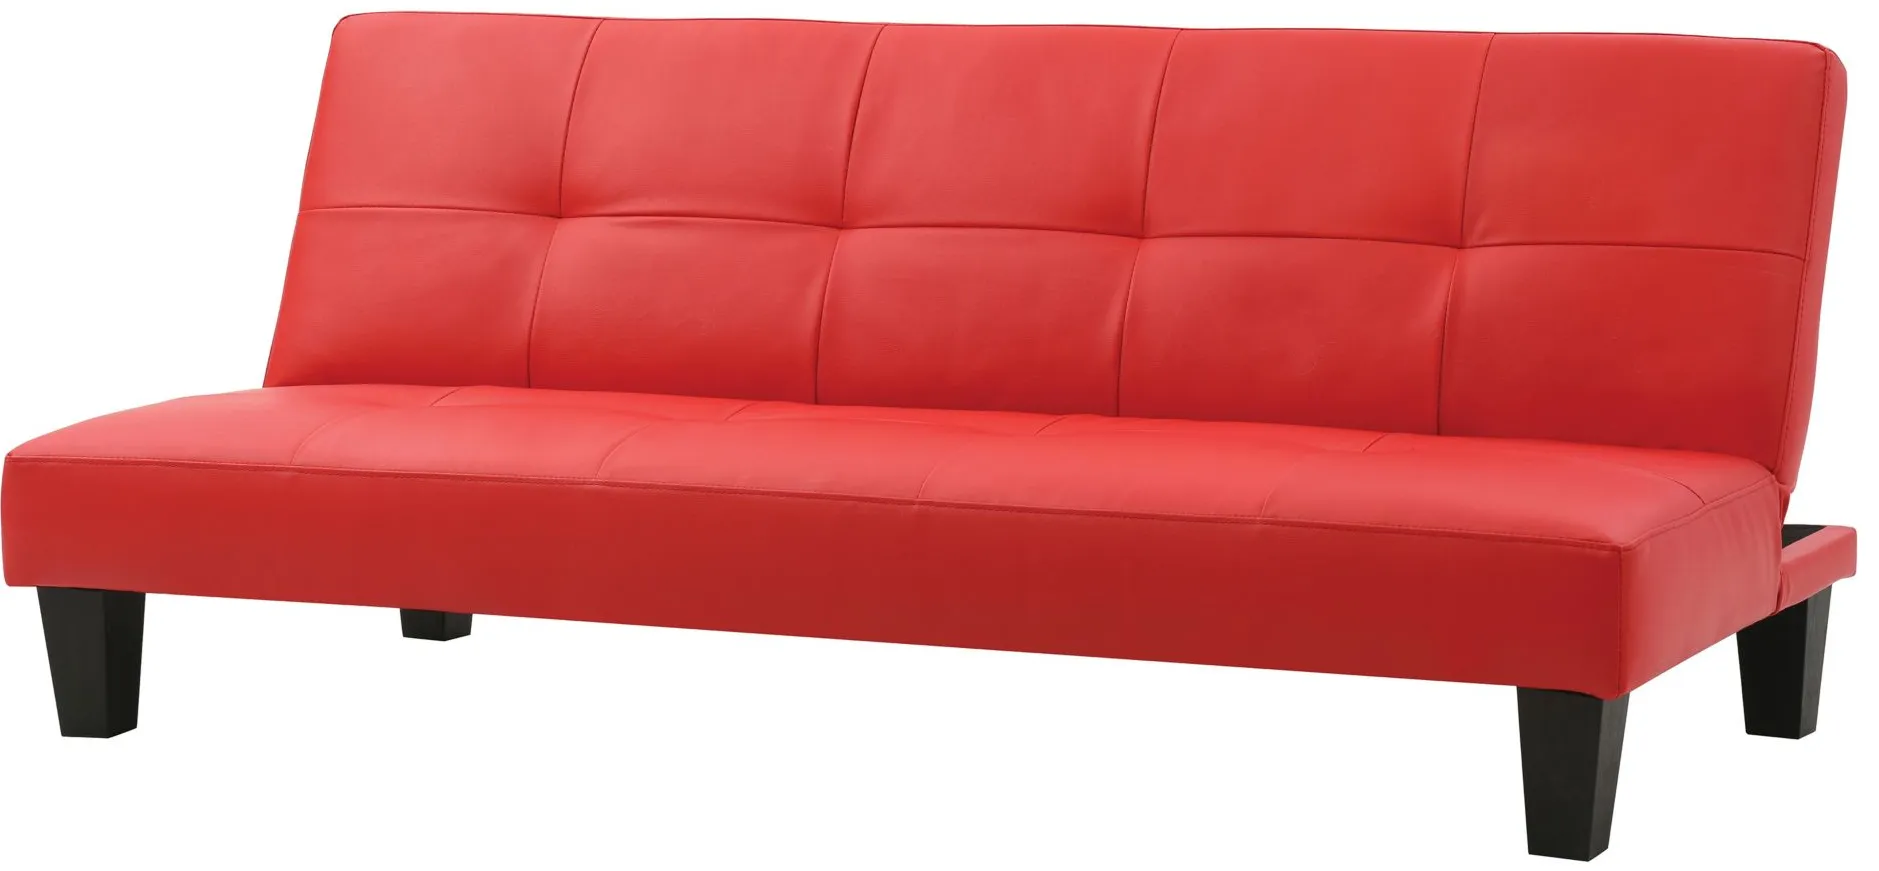 Alan Klik Klak in Red by Glory Furniture